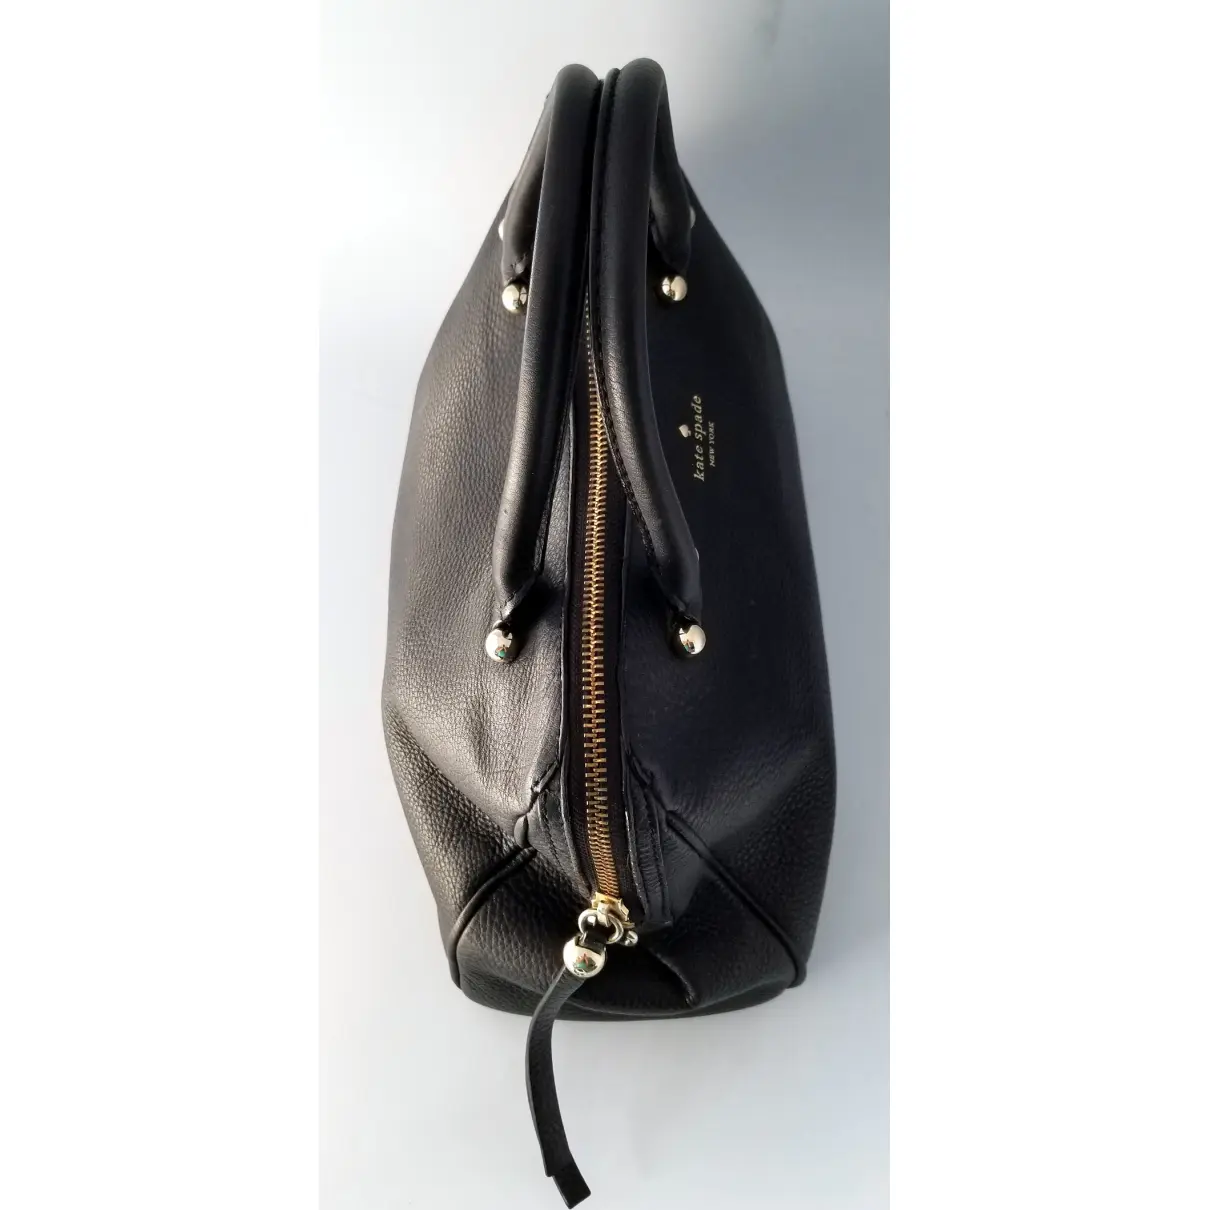 Buy Kate Spade Leather satchel online